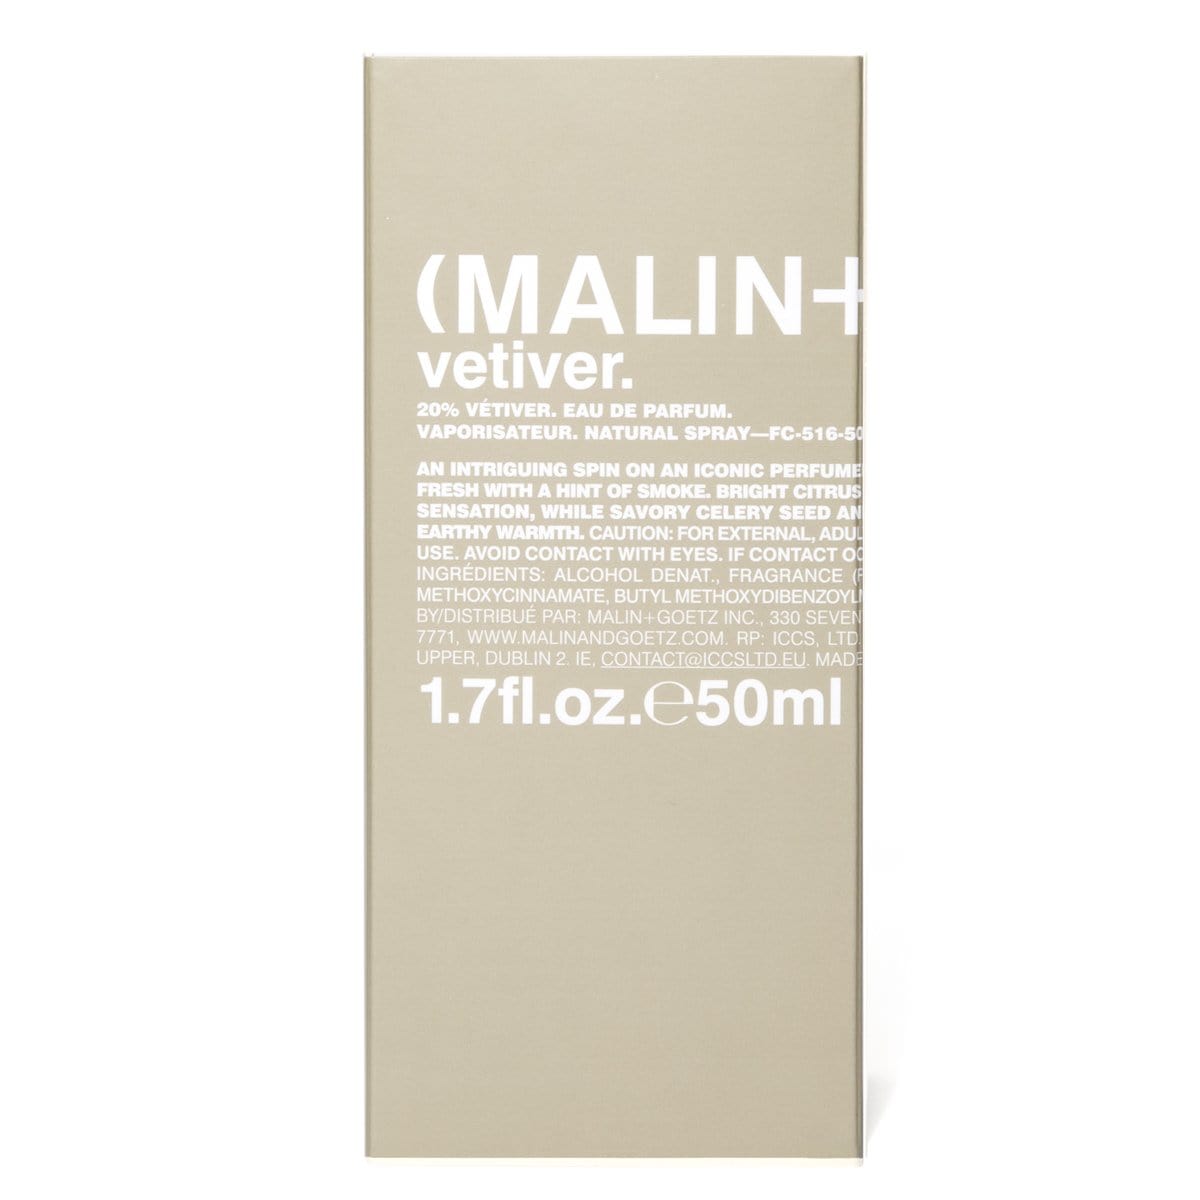 Vetiver (MALIN+GOETZ) Eau de Parfum